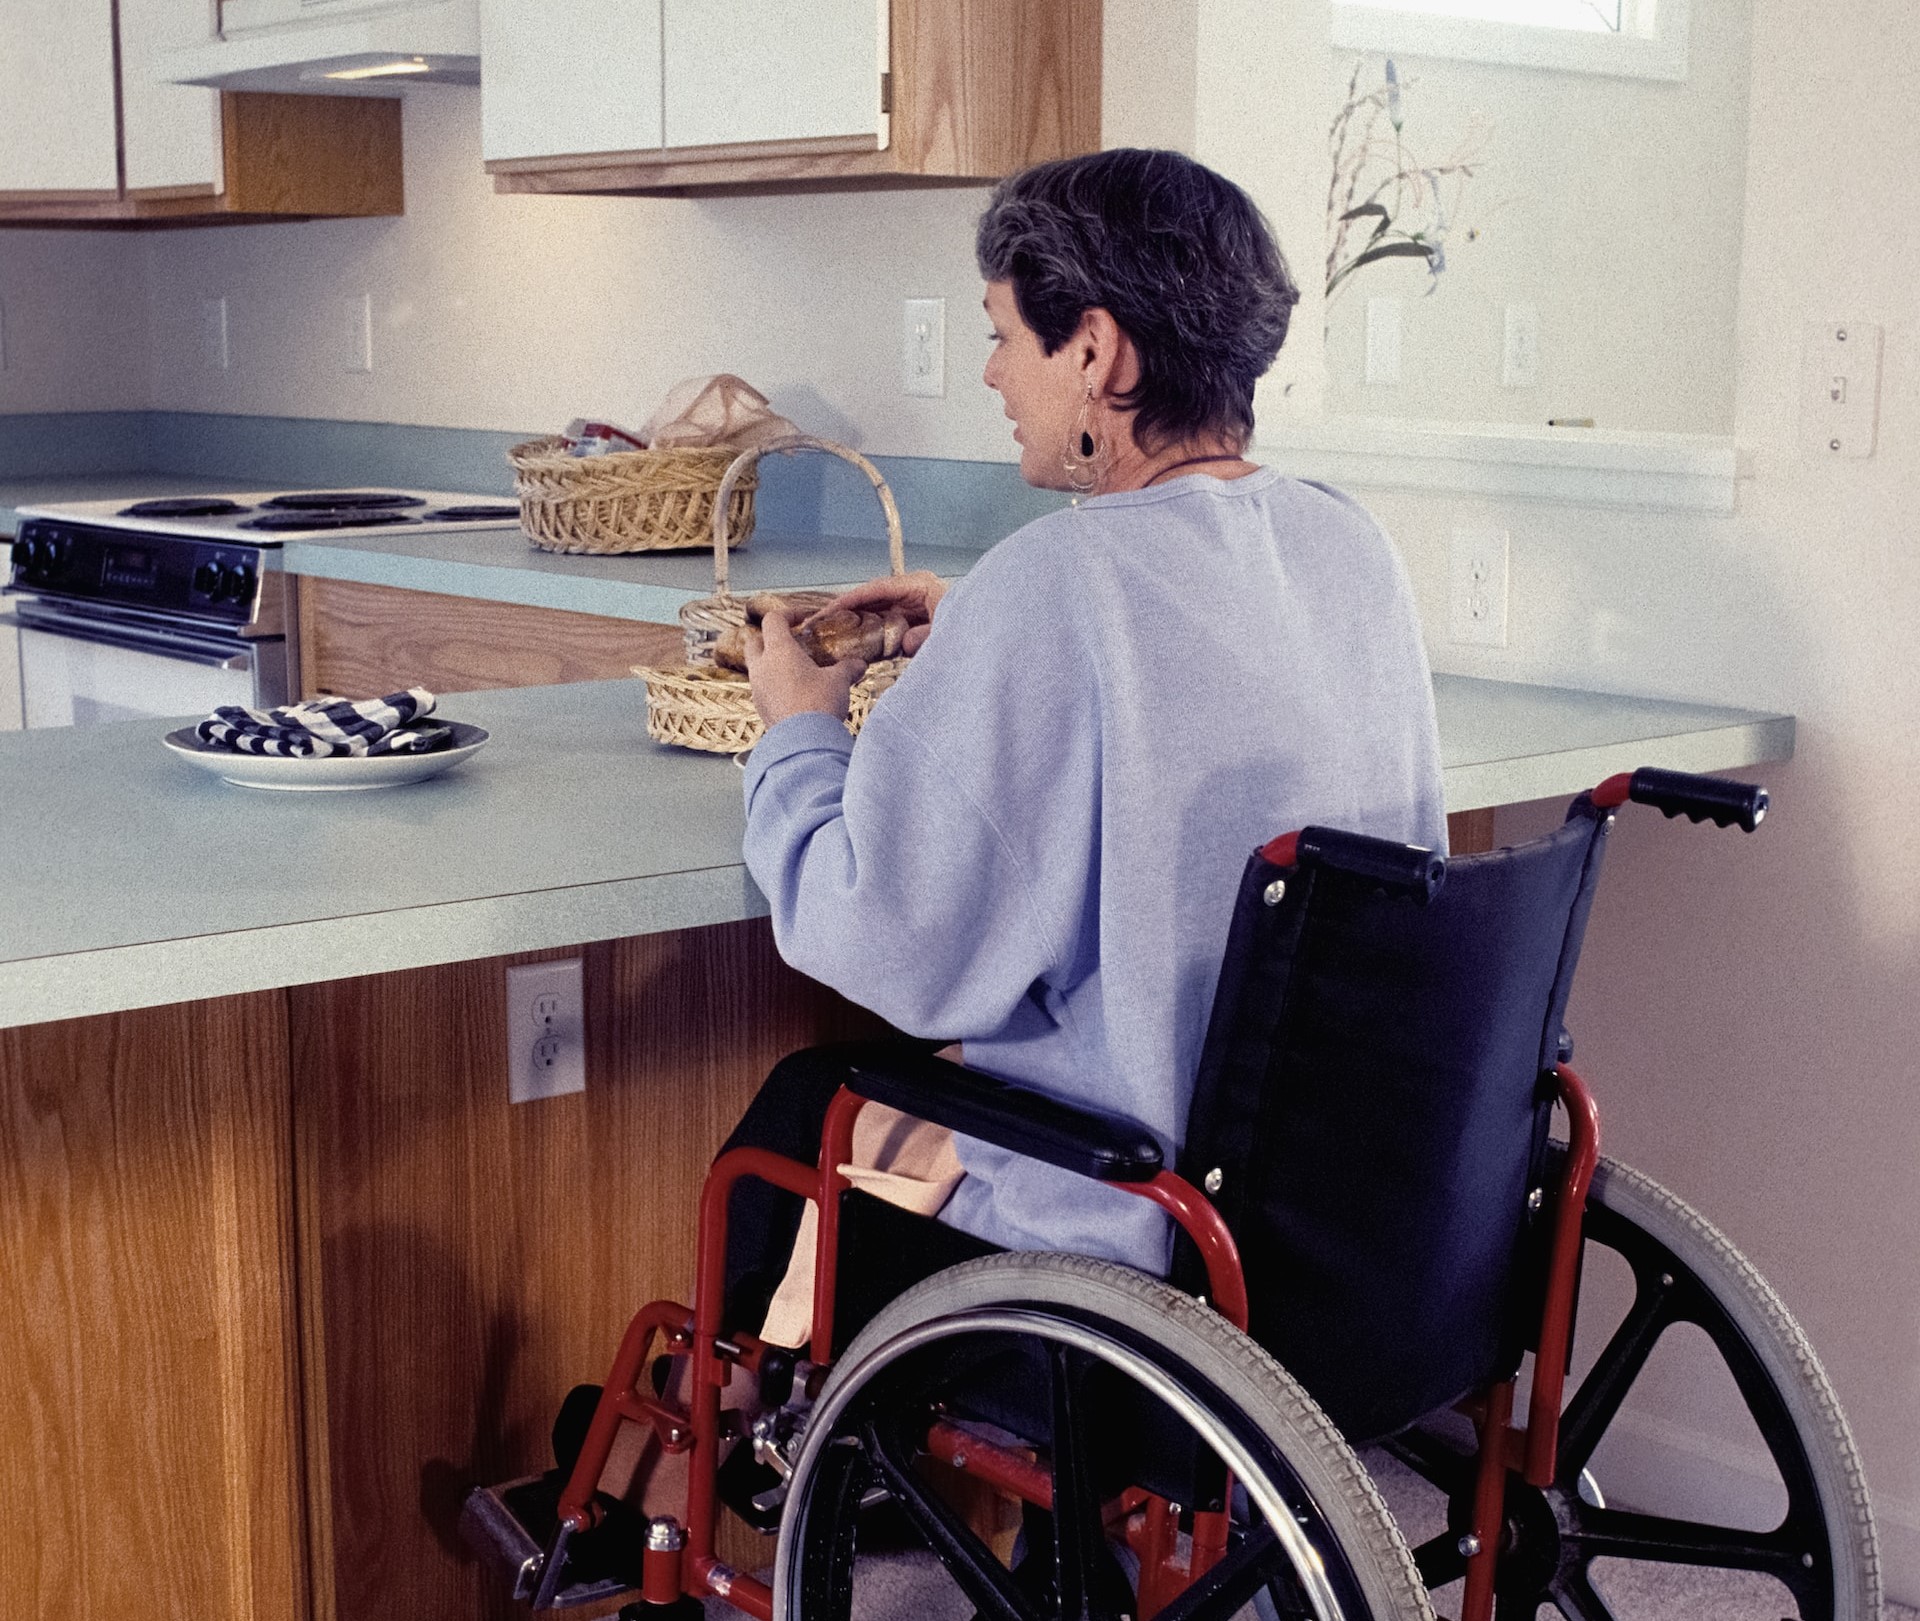 Someone in a wheelchair preparing food in their kitchen